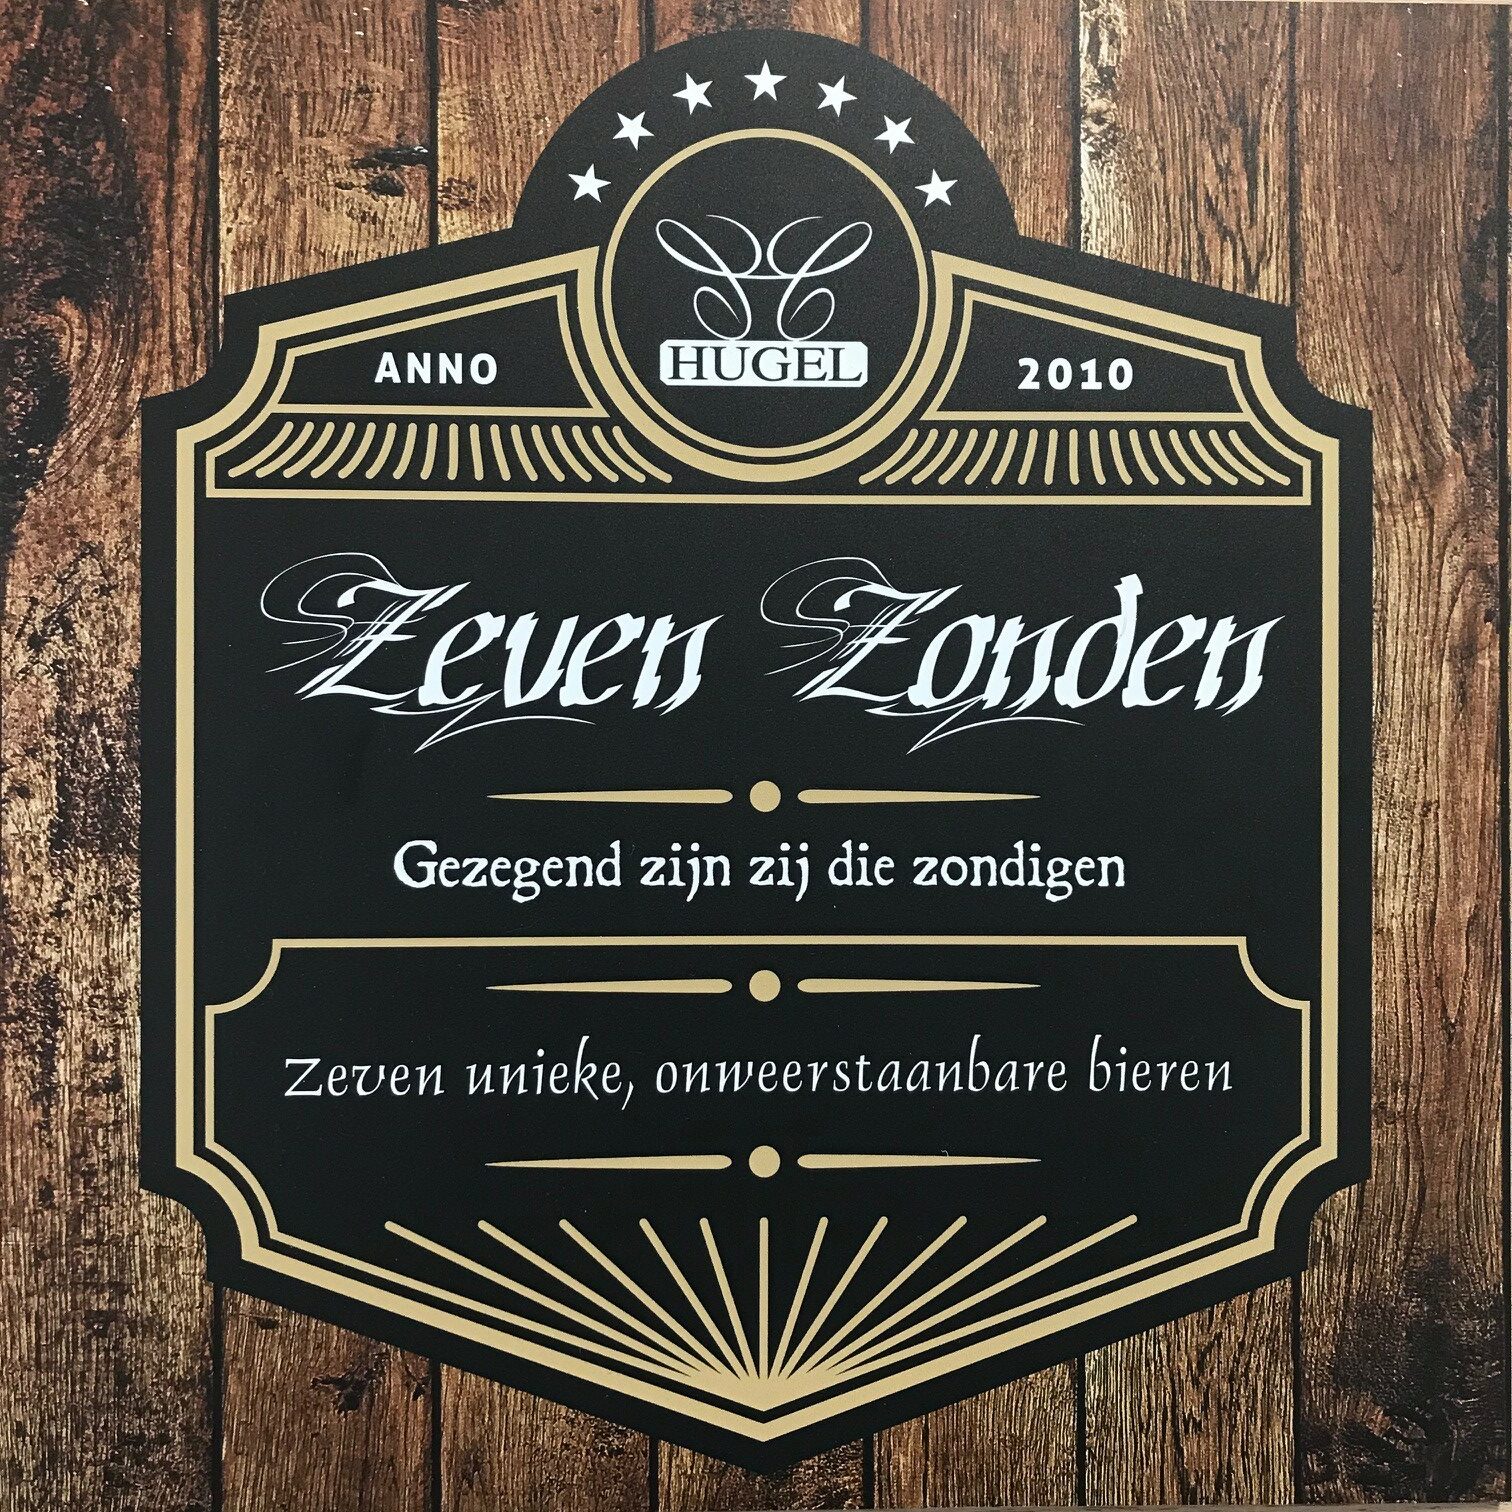 Zeven Zonden/ Seven Sins merchandise on the brew society webshop